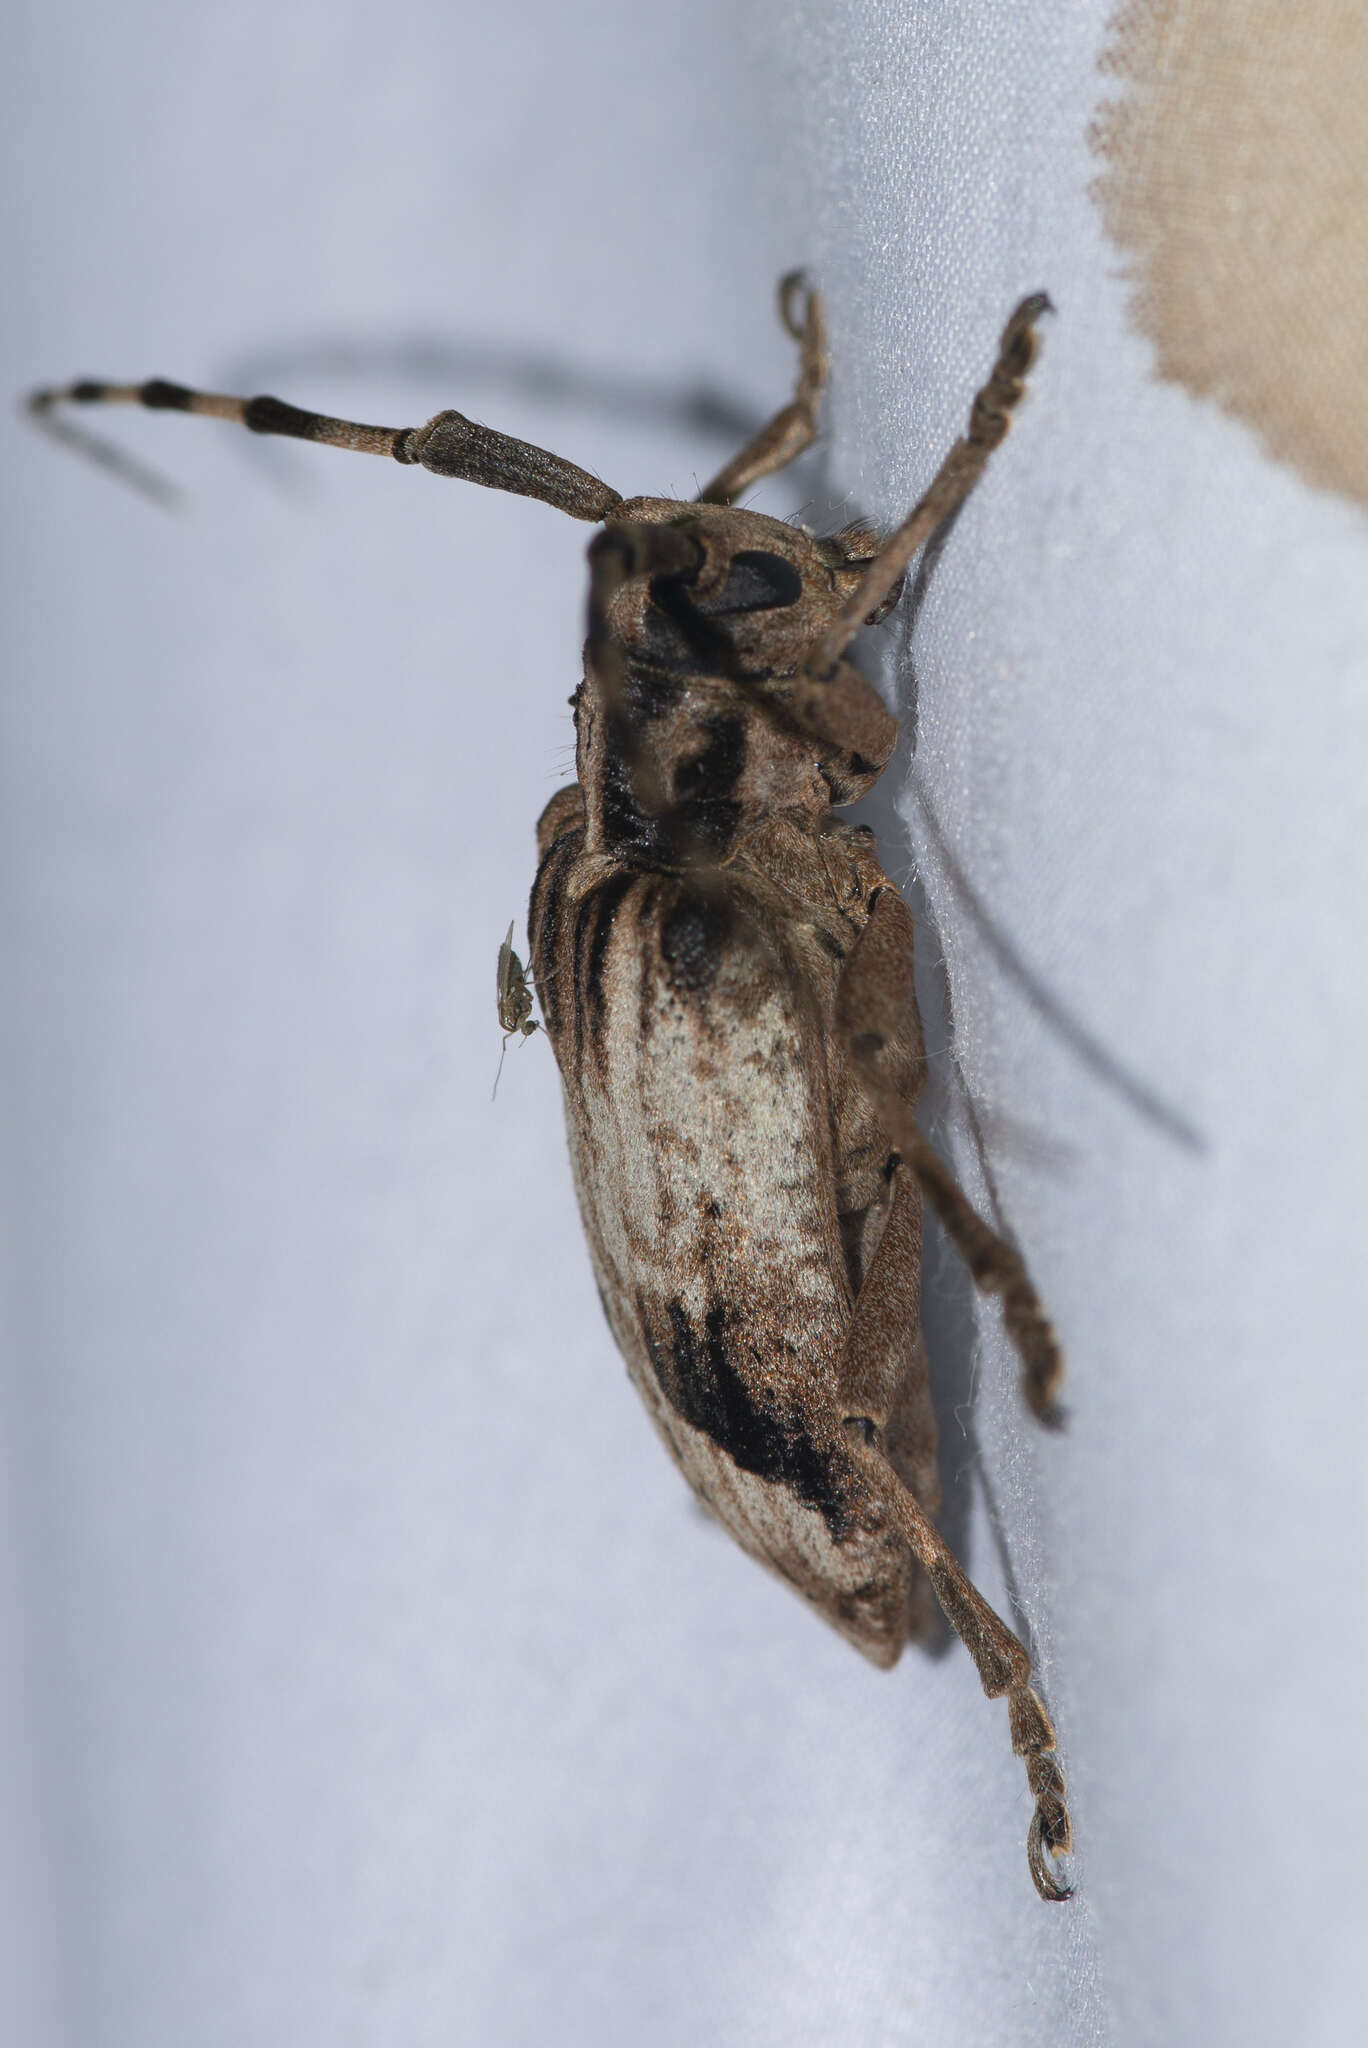 Image of Blepephaeus succinctor (Chevrolat 1852)